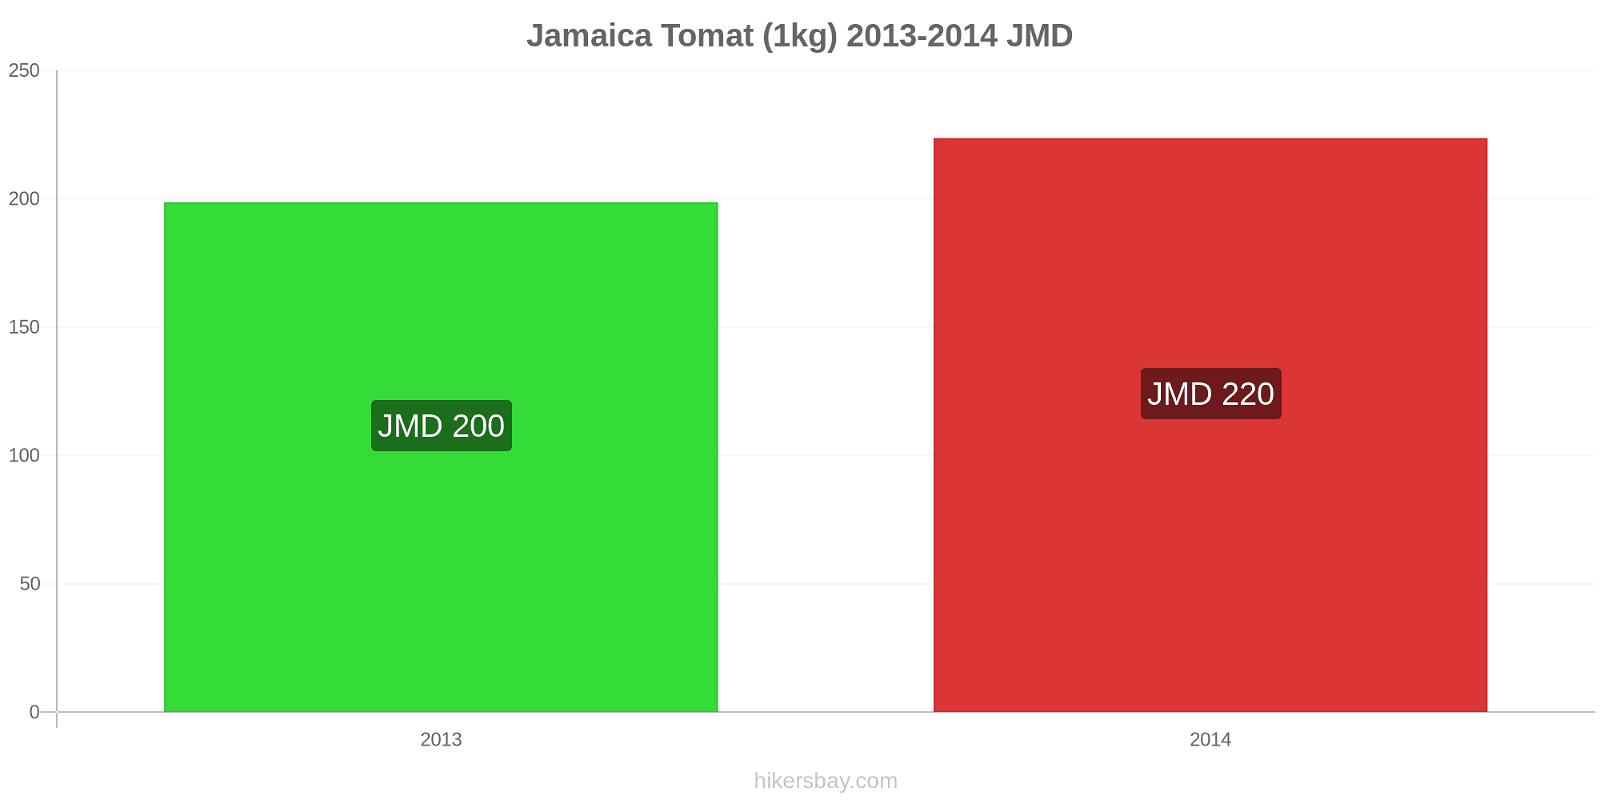 Jamaica prisendringer Tomat (1kg) hikersbay.com